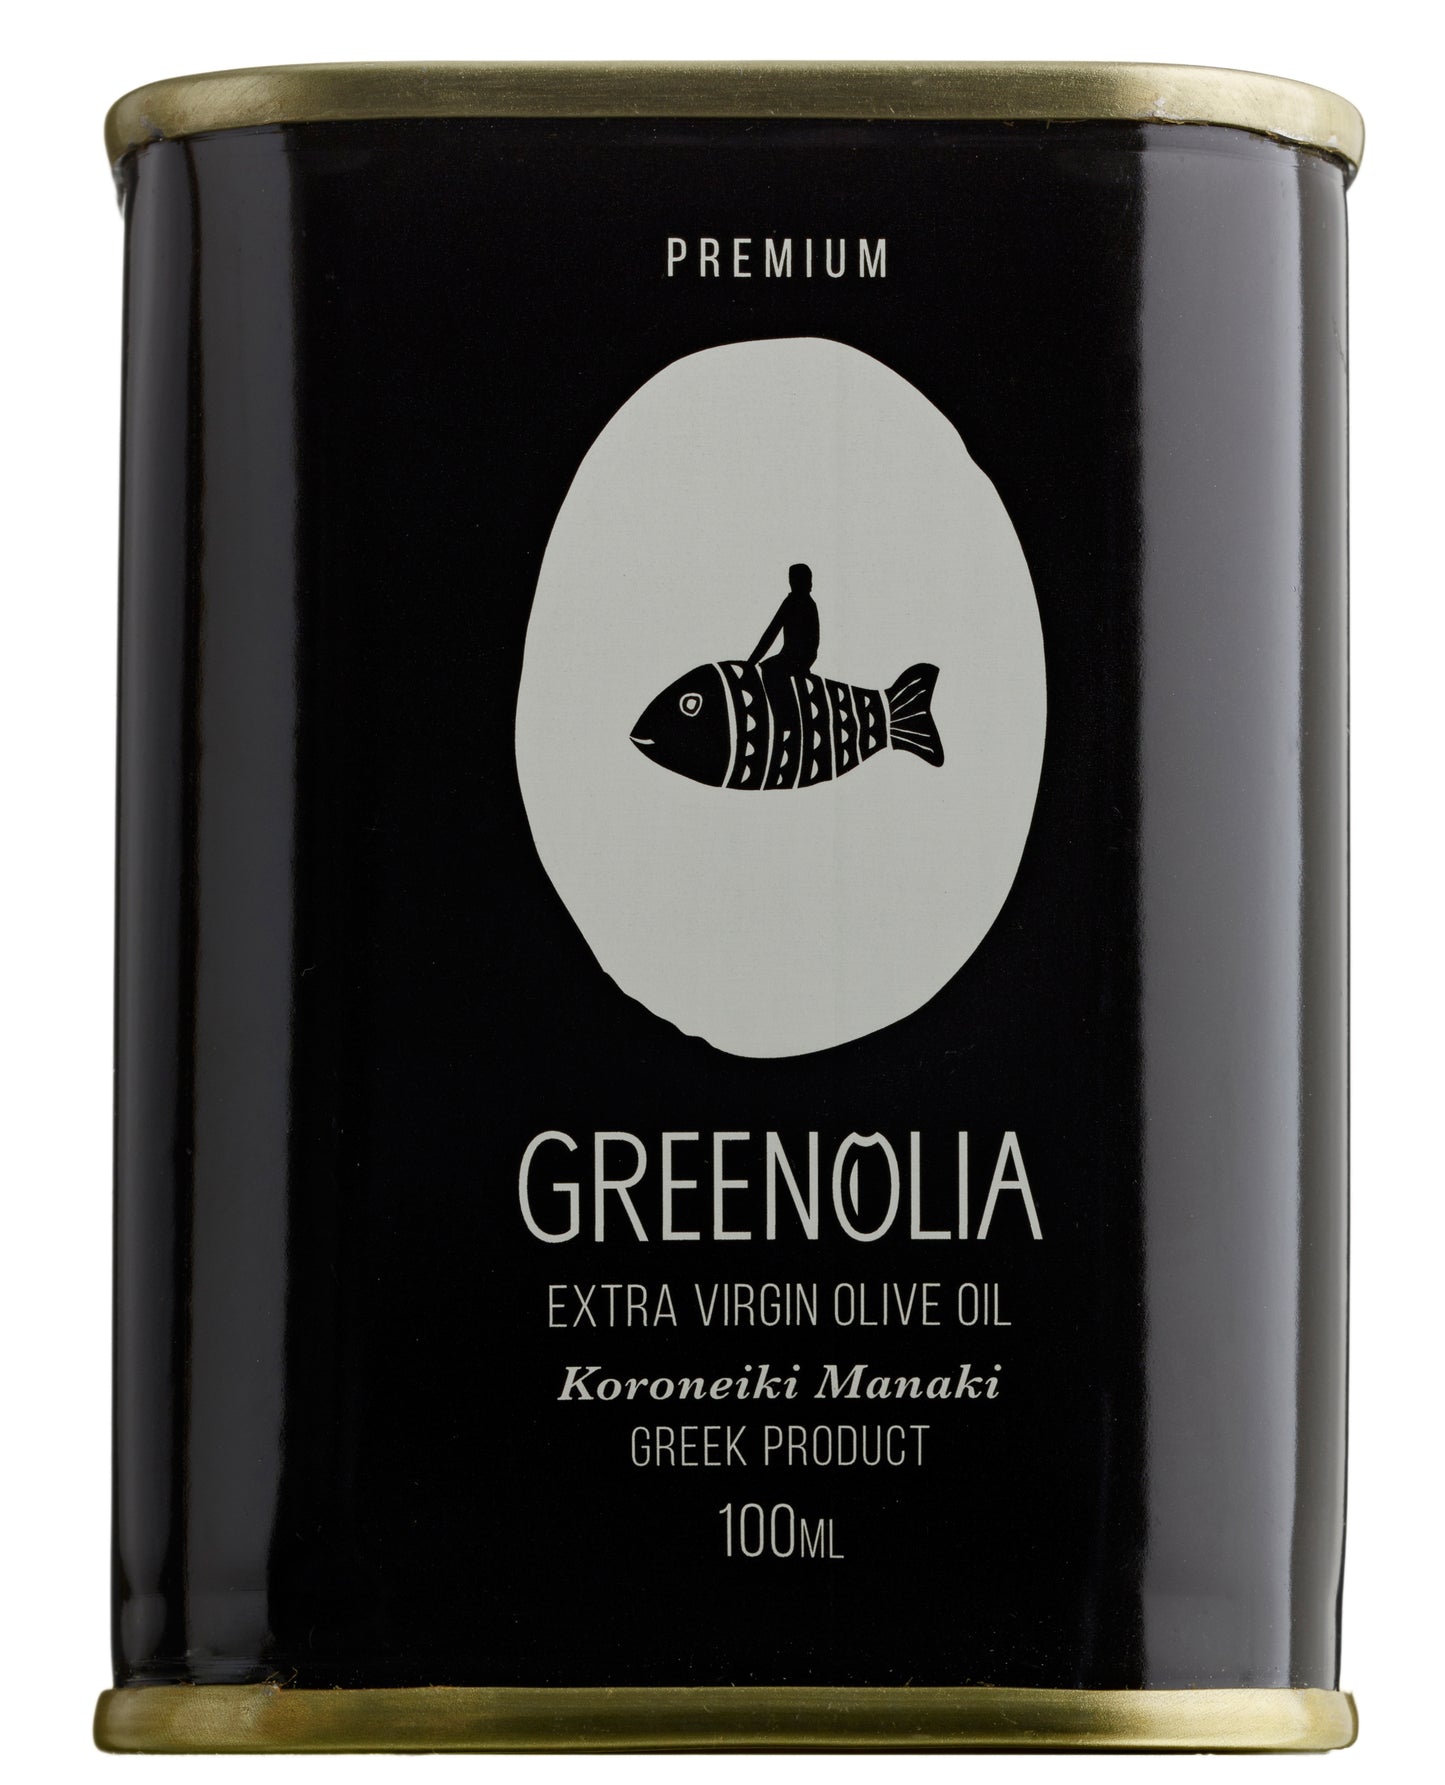 Greenolia Premium Εξαιρετικά Παρθένο Ελαιόλαδο 100ml